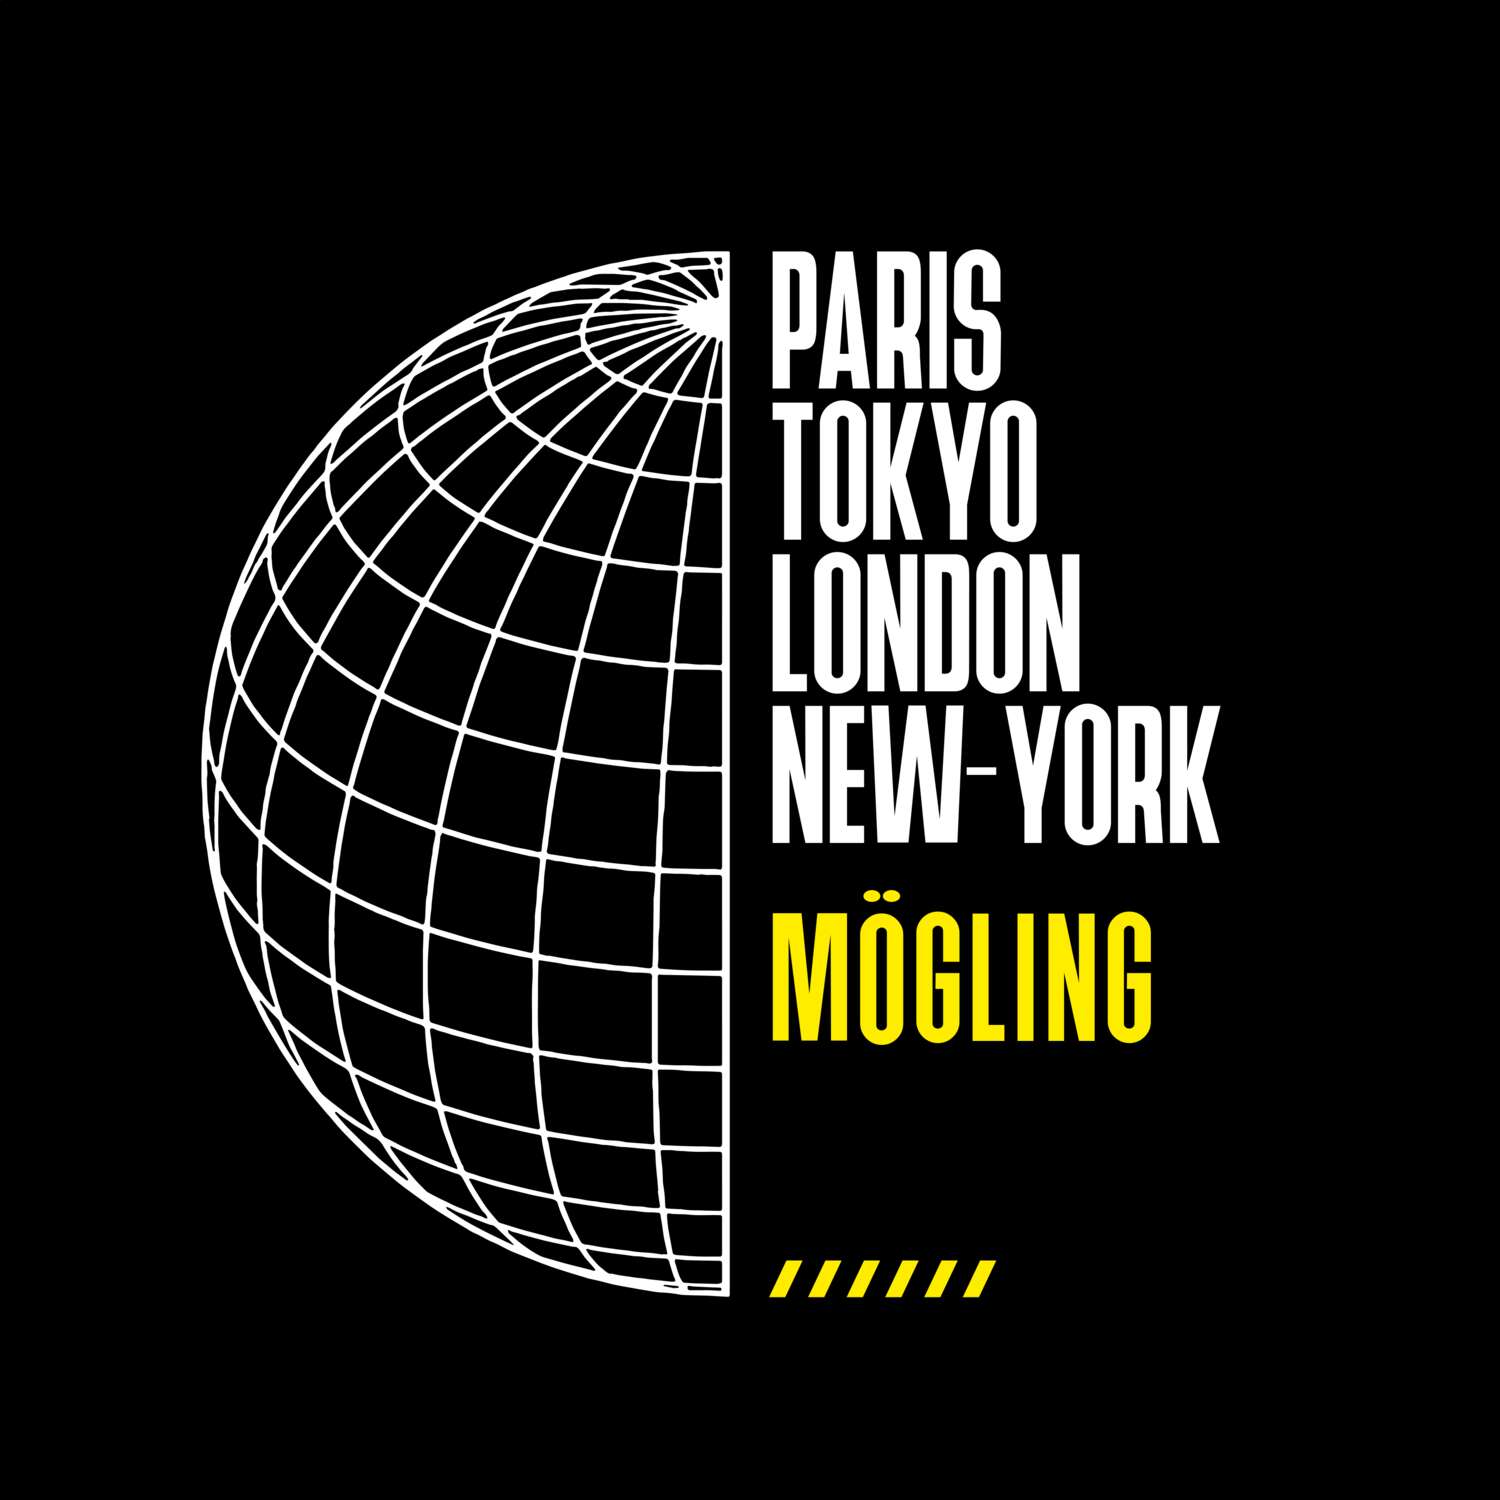 Mögling T-Shirt »Paris Tokyo London«